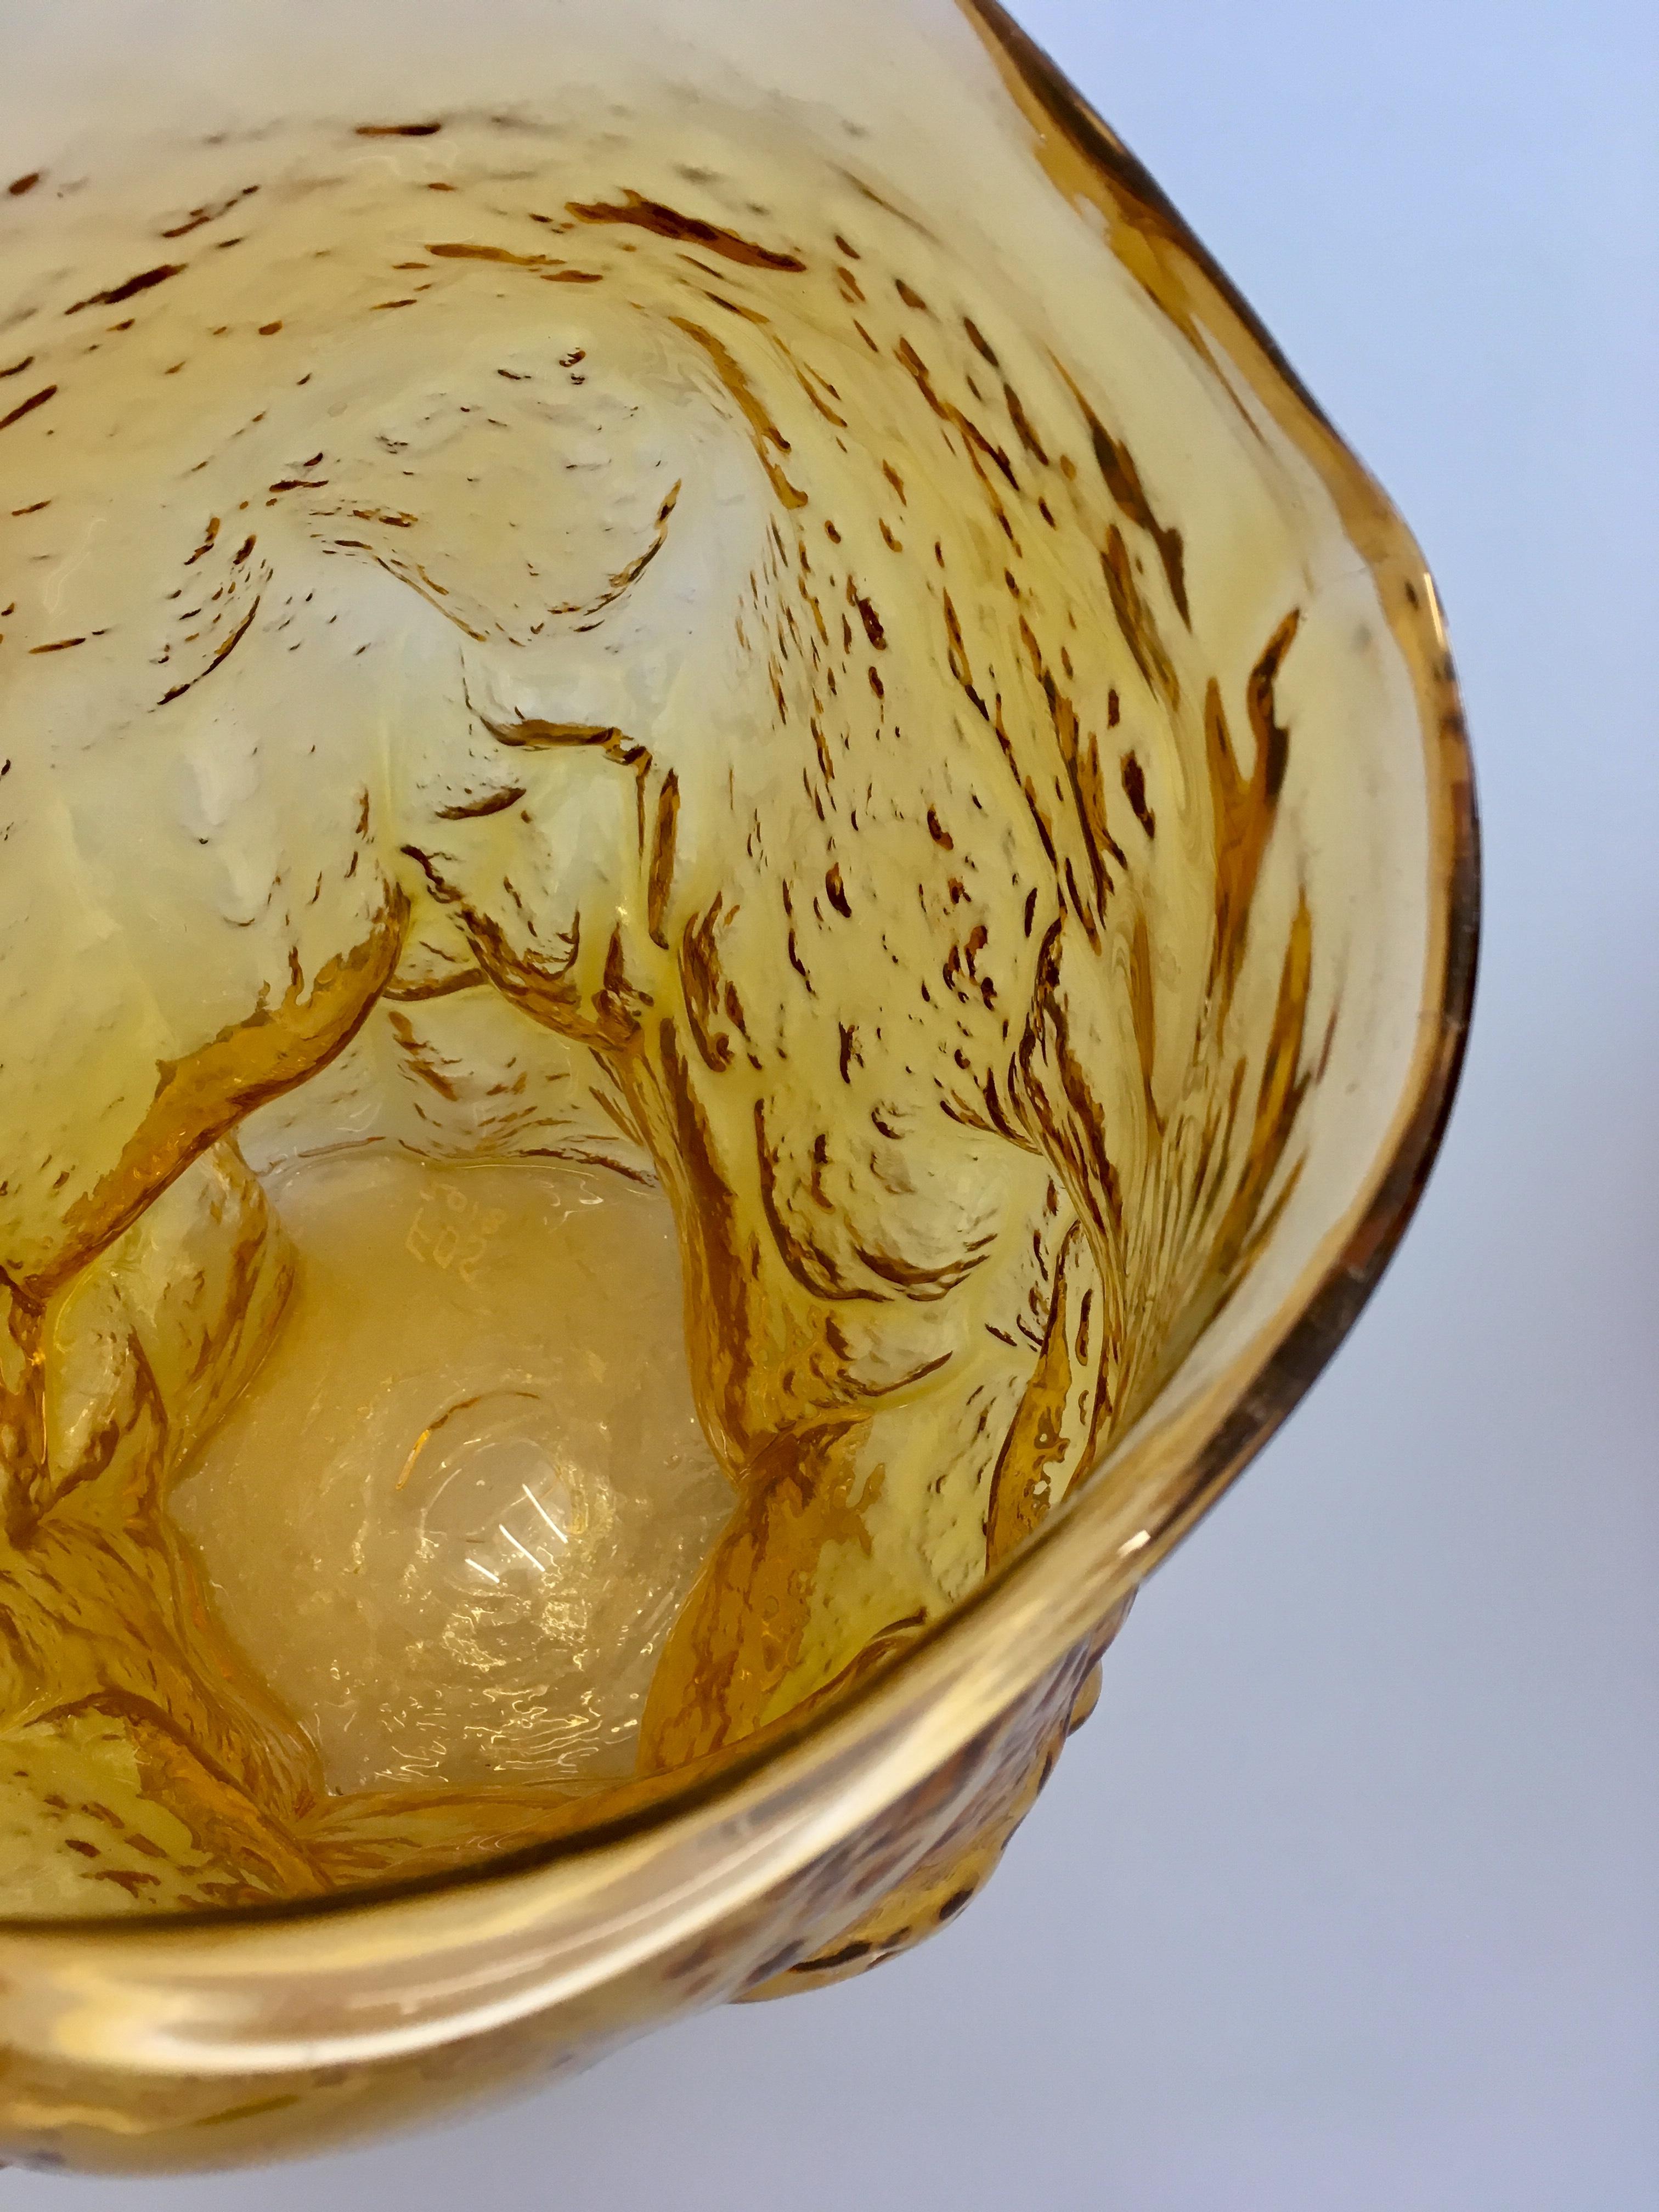 Post-Modern Contemporary Design Unique Glass 'Mountain' Vase by Fos, Butterscotch